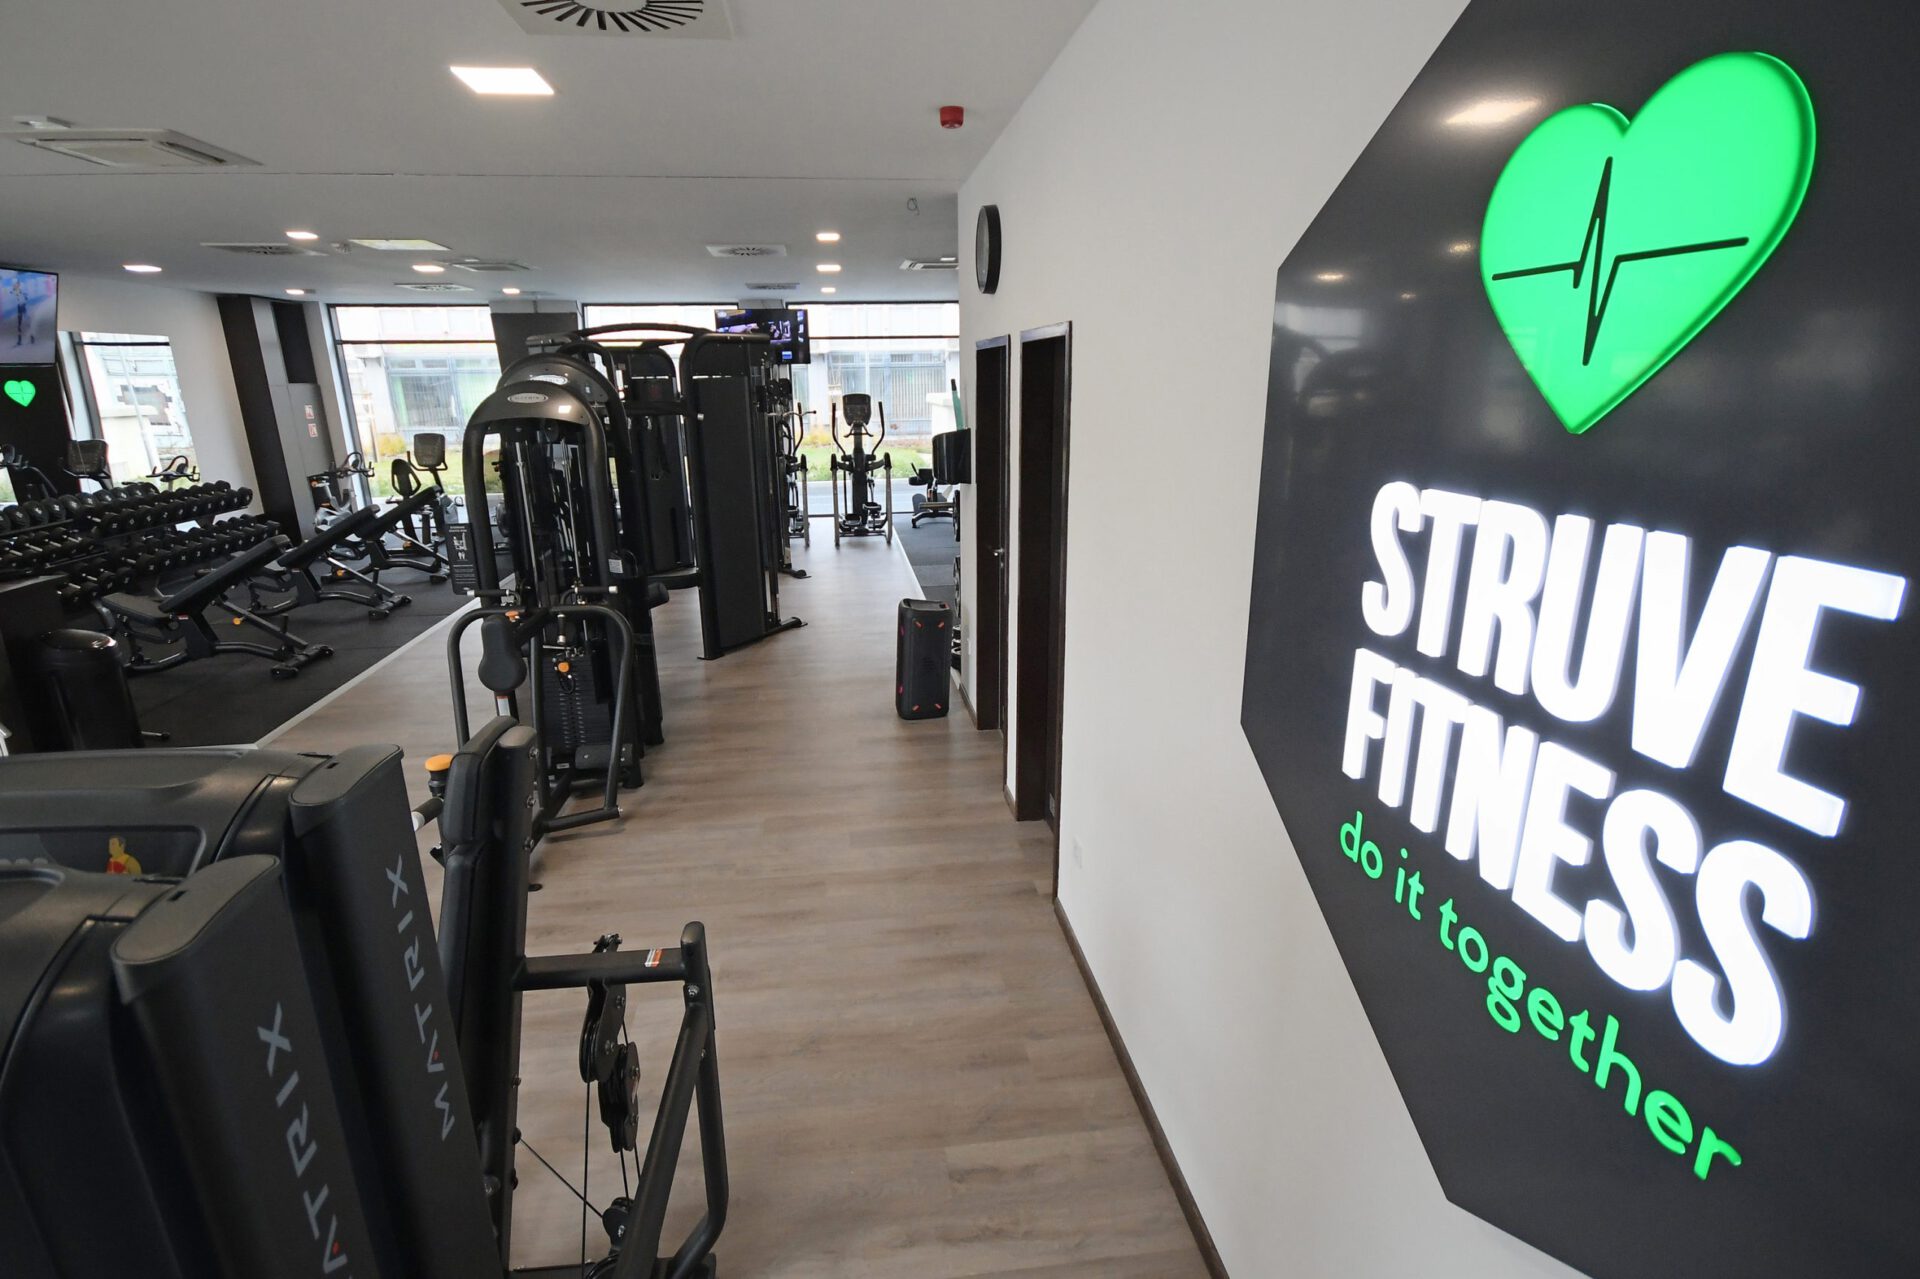 Struve Fitness XIII (13) kerület edzőterem fitnesz terem